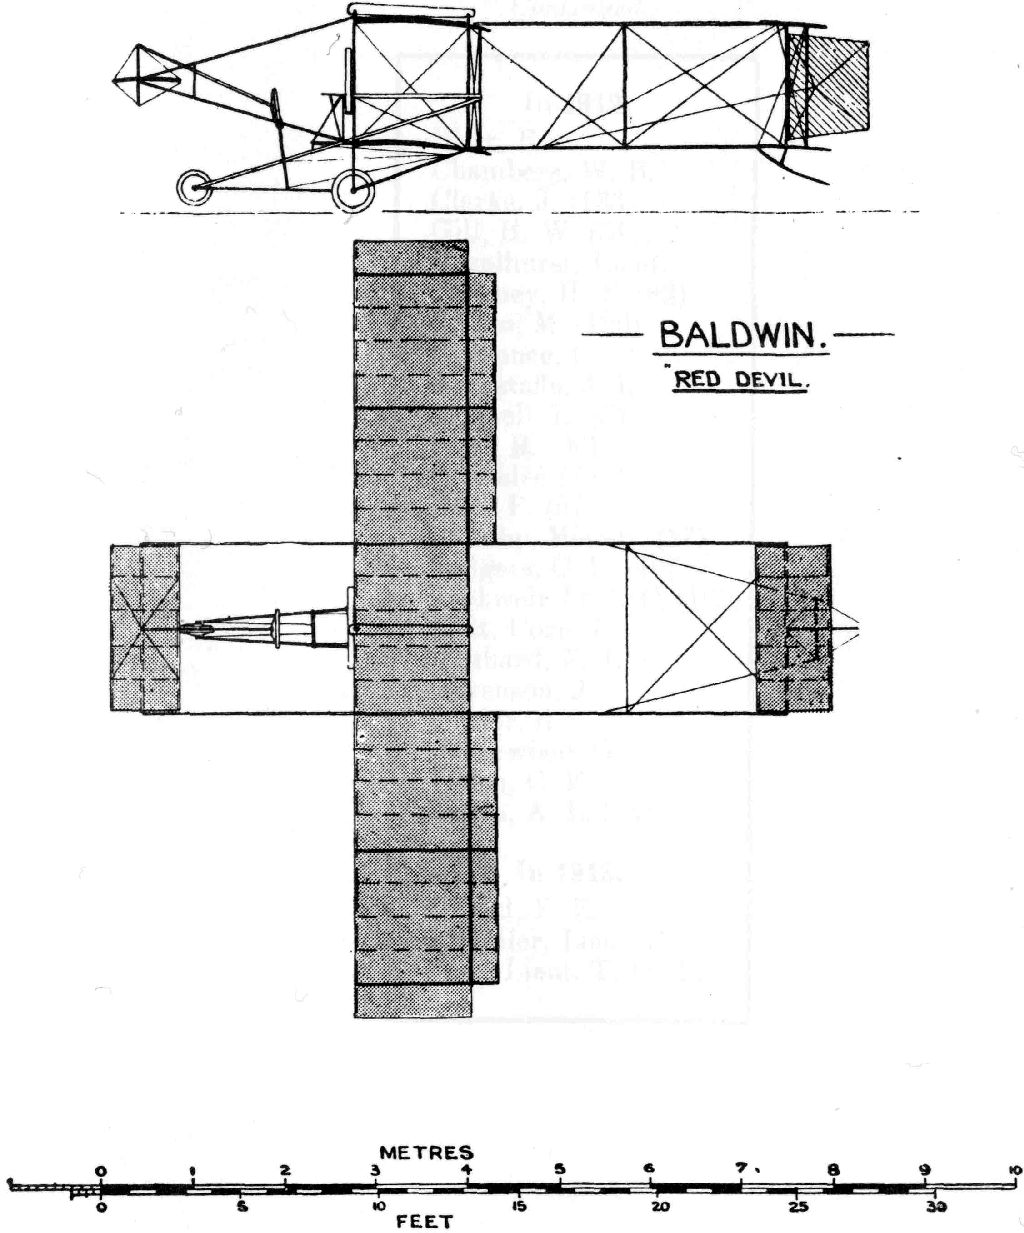 BALDWIN. RED DEVIL. Uniform Aeroplane Scale